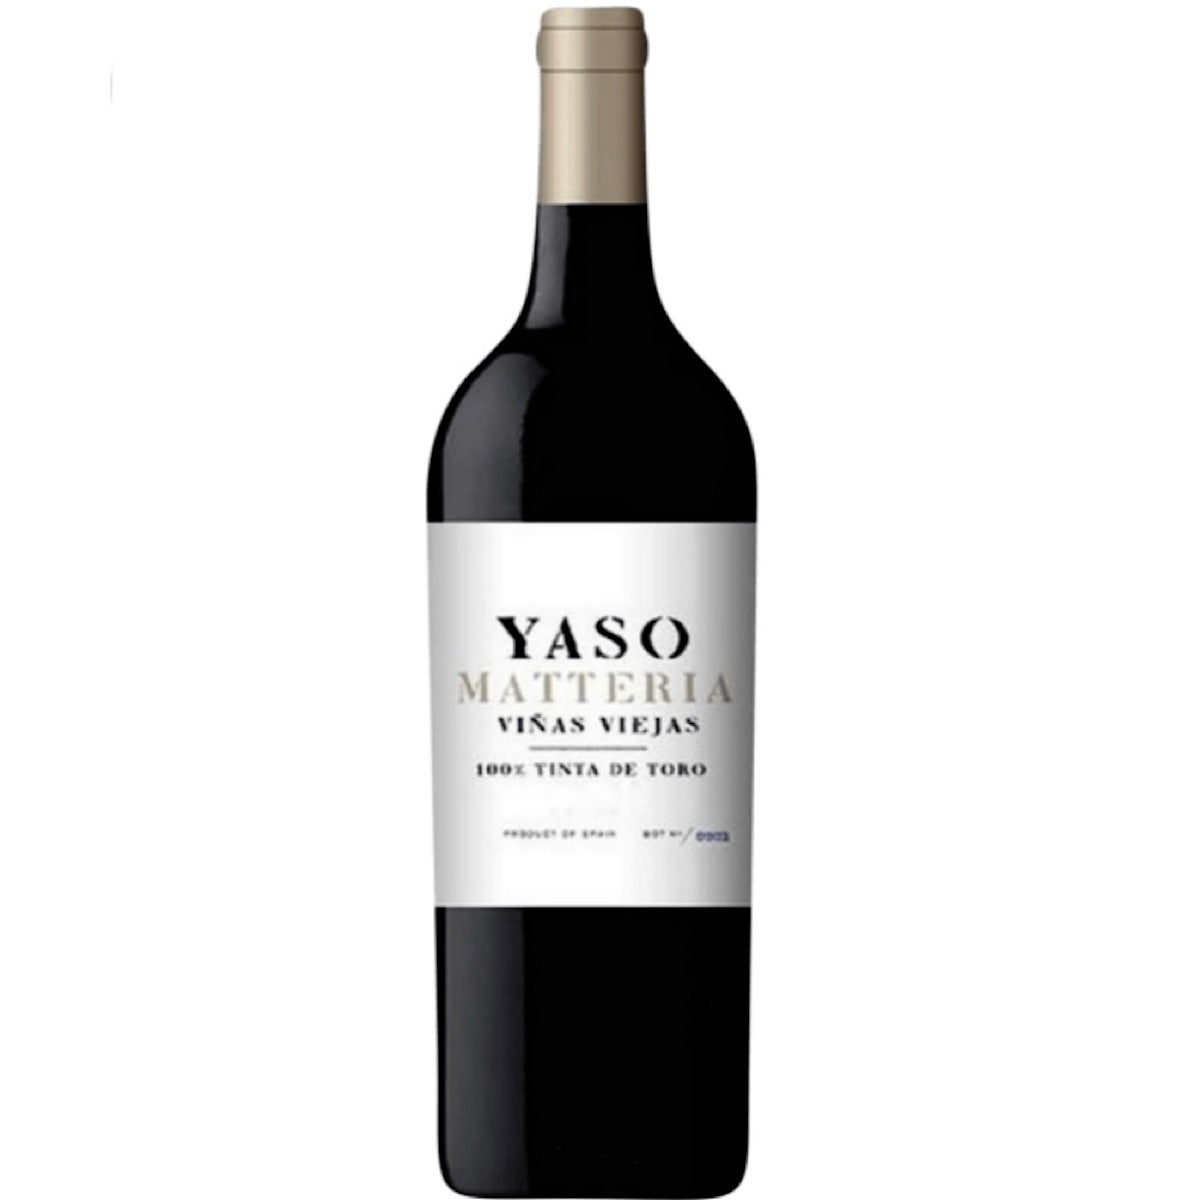 Yaso Matteria, Vinas Viejas, Toro, 3 Bottle Case 75cl